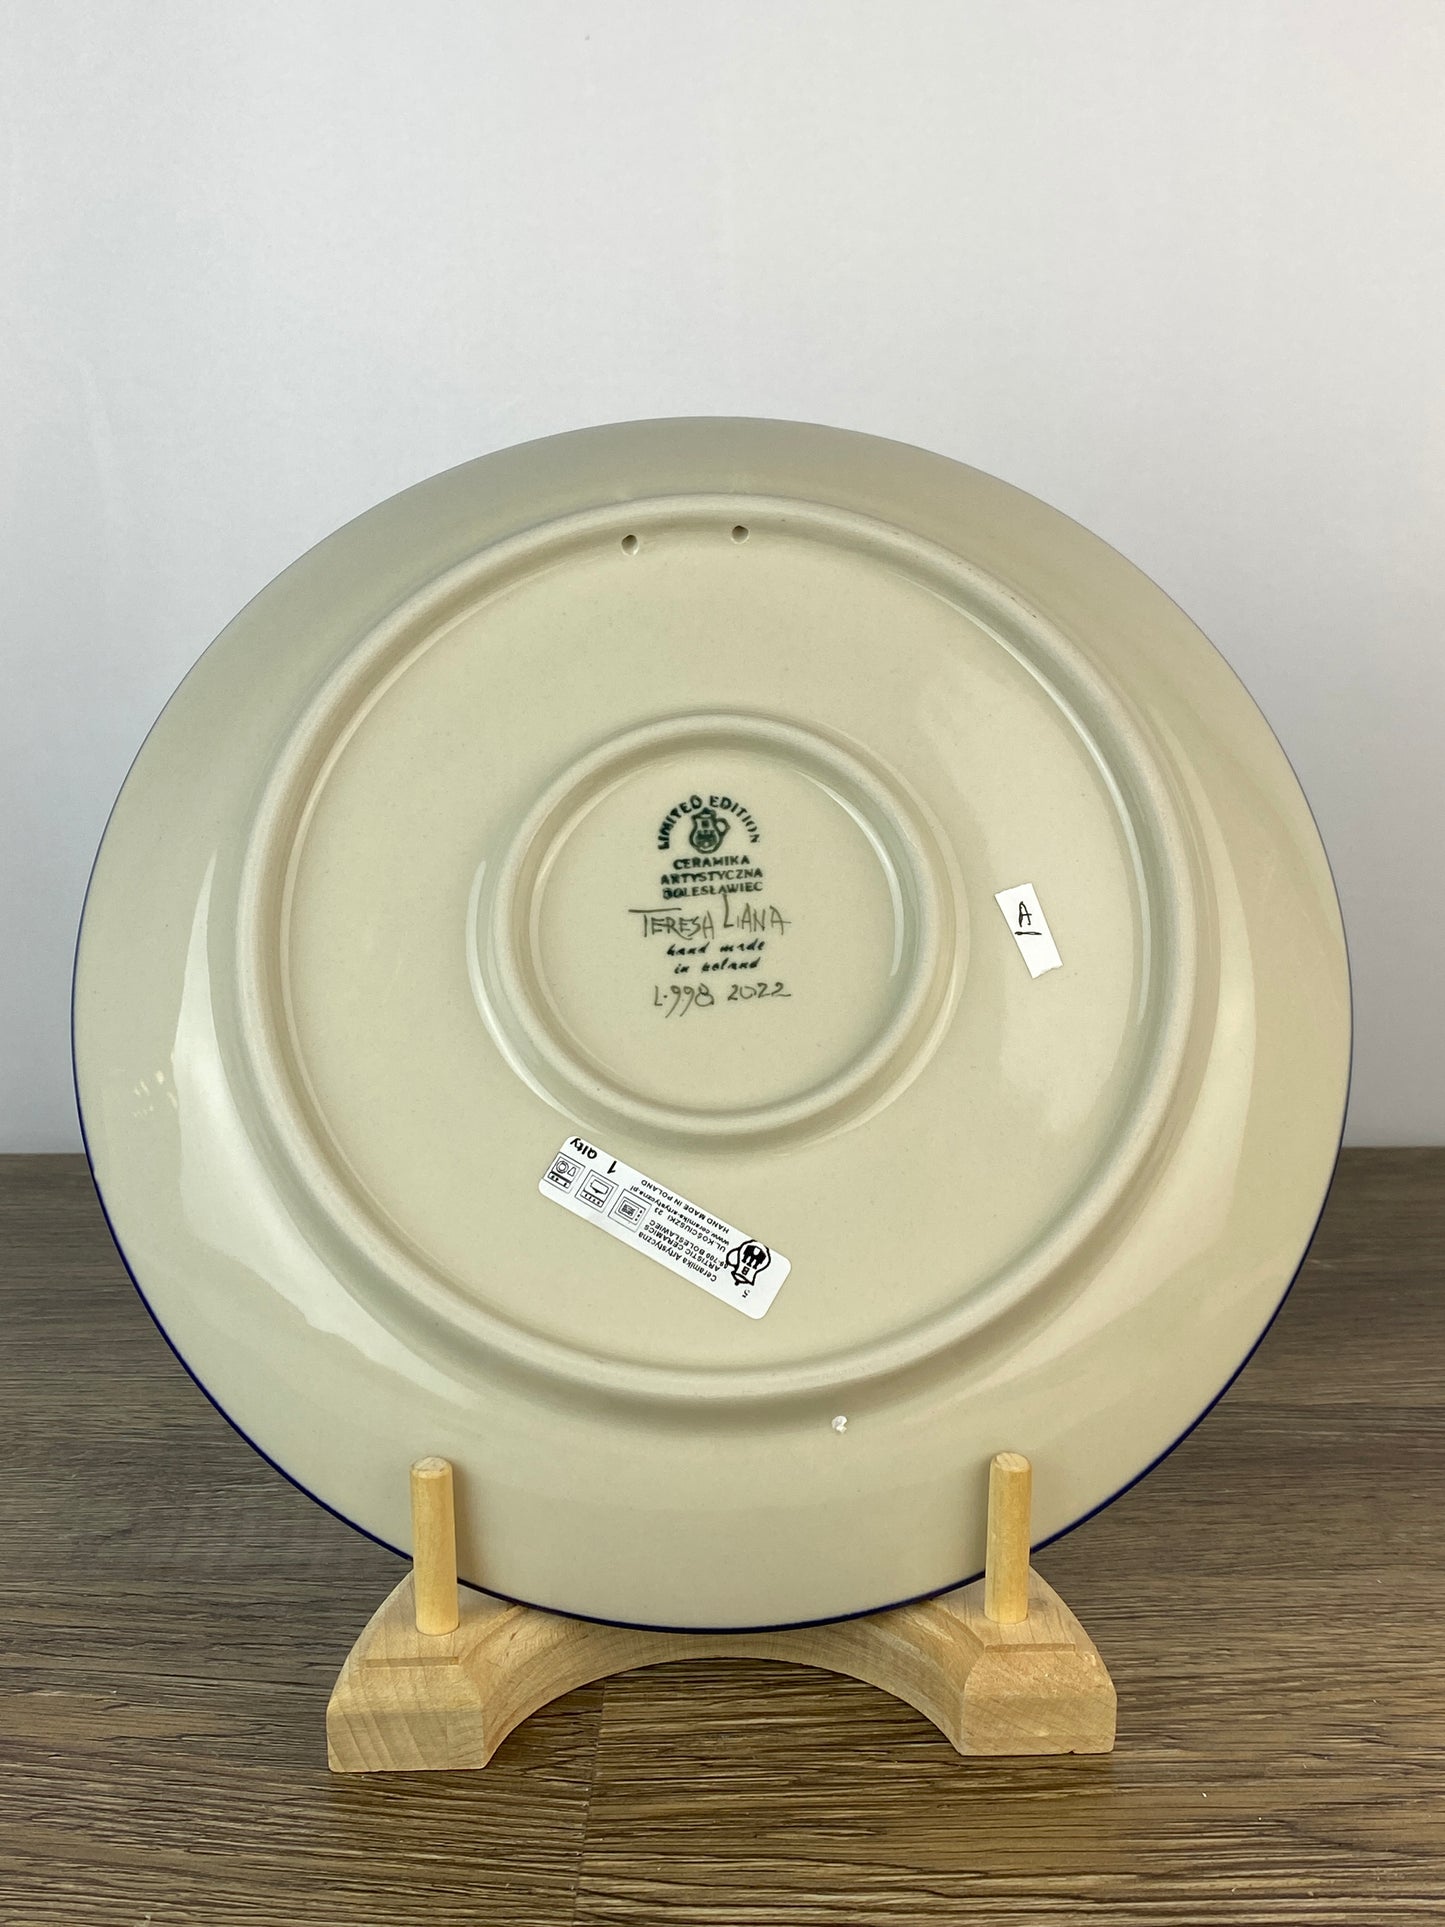 Teresa Liana 2022 Limited Edition 10.5" Plate - Shape 223 - Pattern L998 A